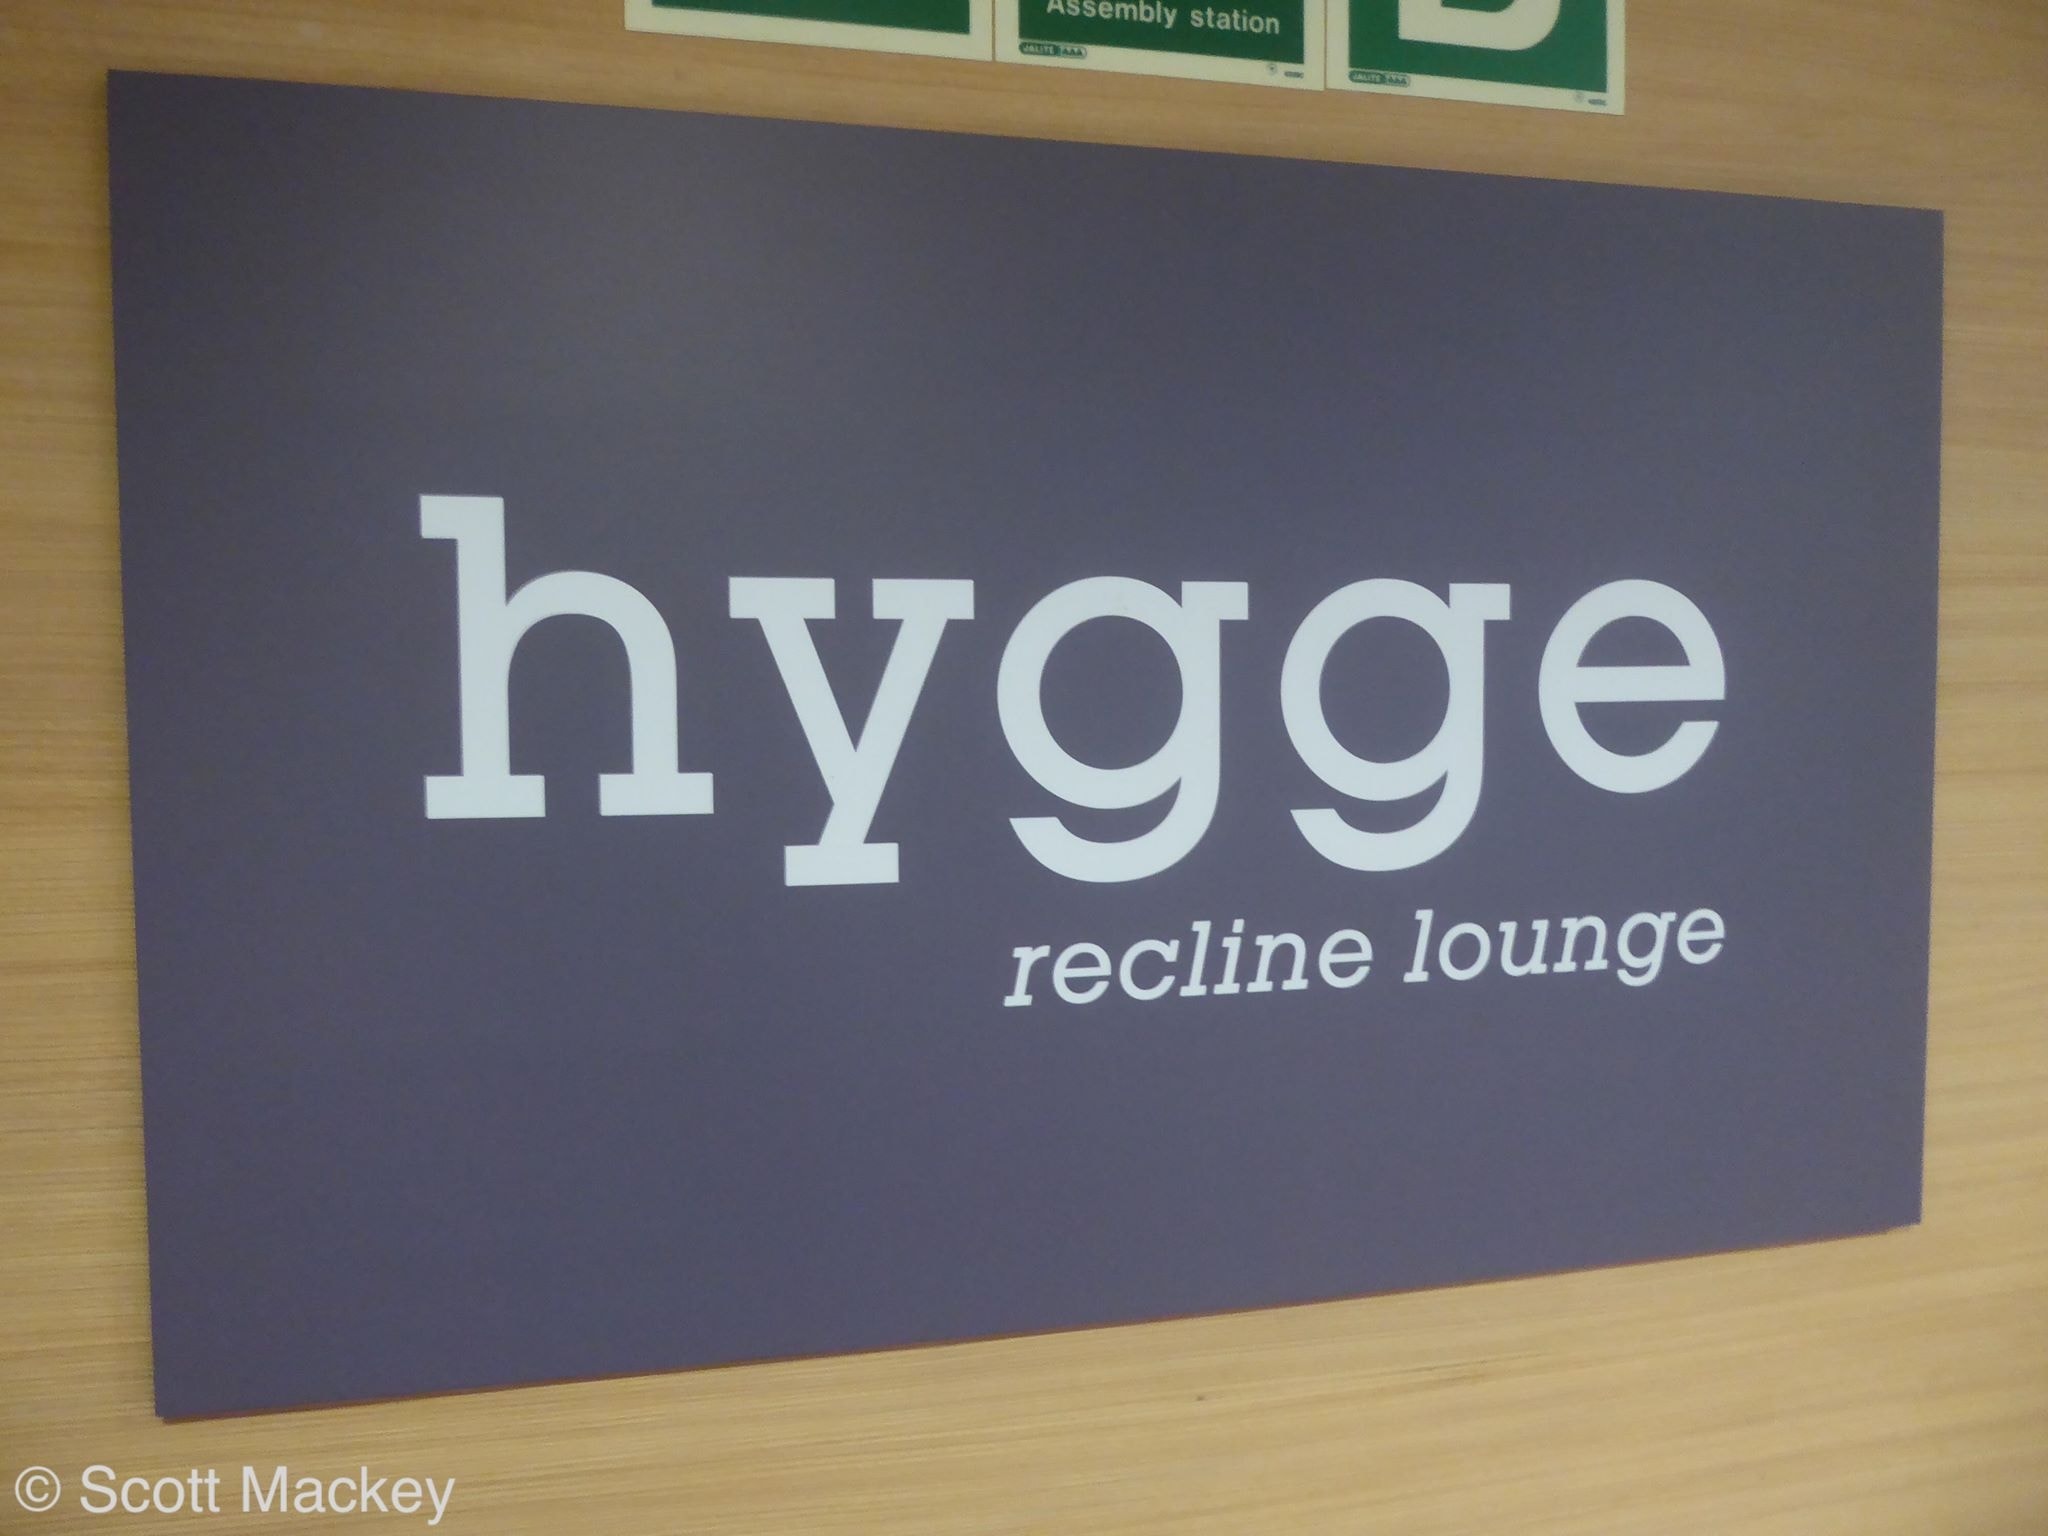 The Hygge lounge onboard STENA SUPERFAST VII. Copyright © Scott Mackey.